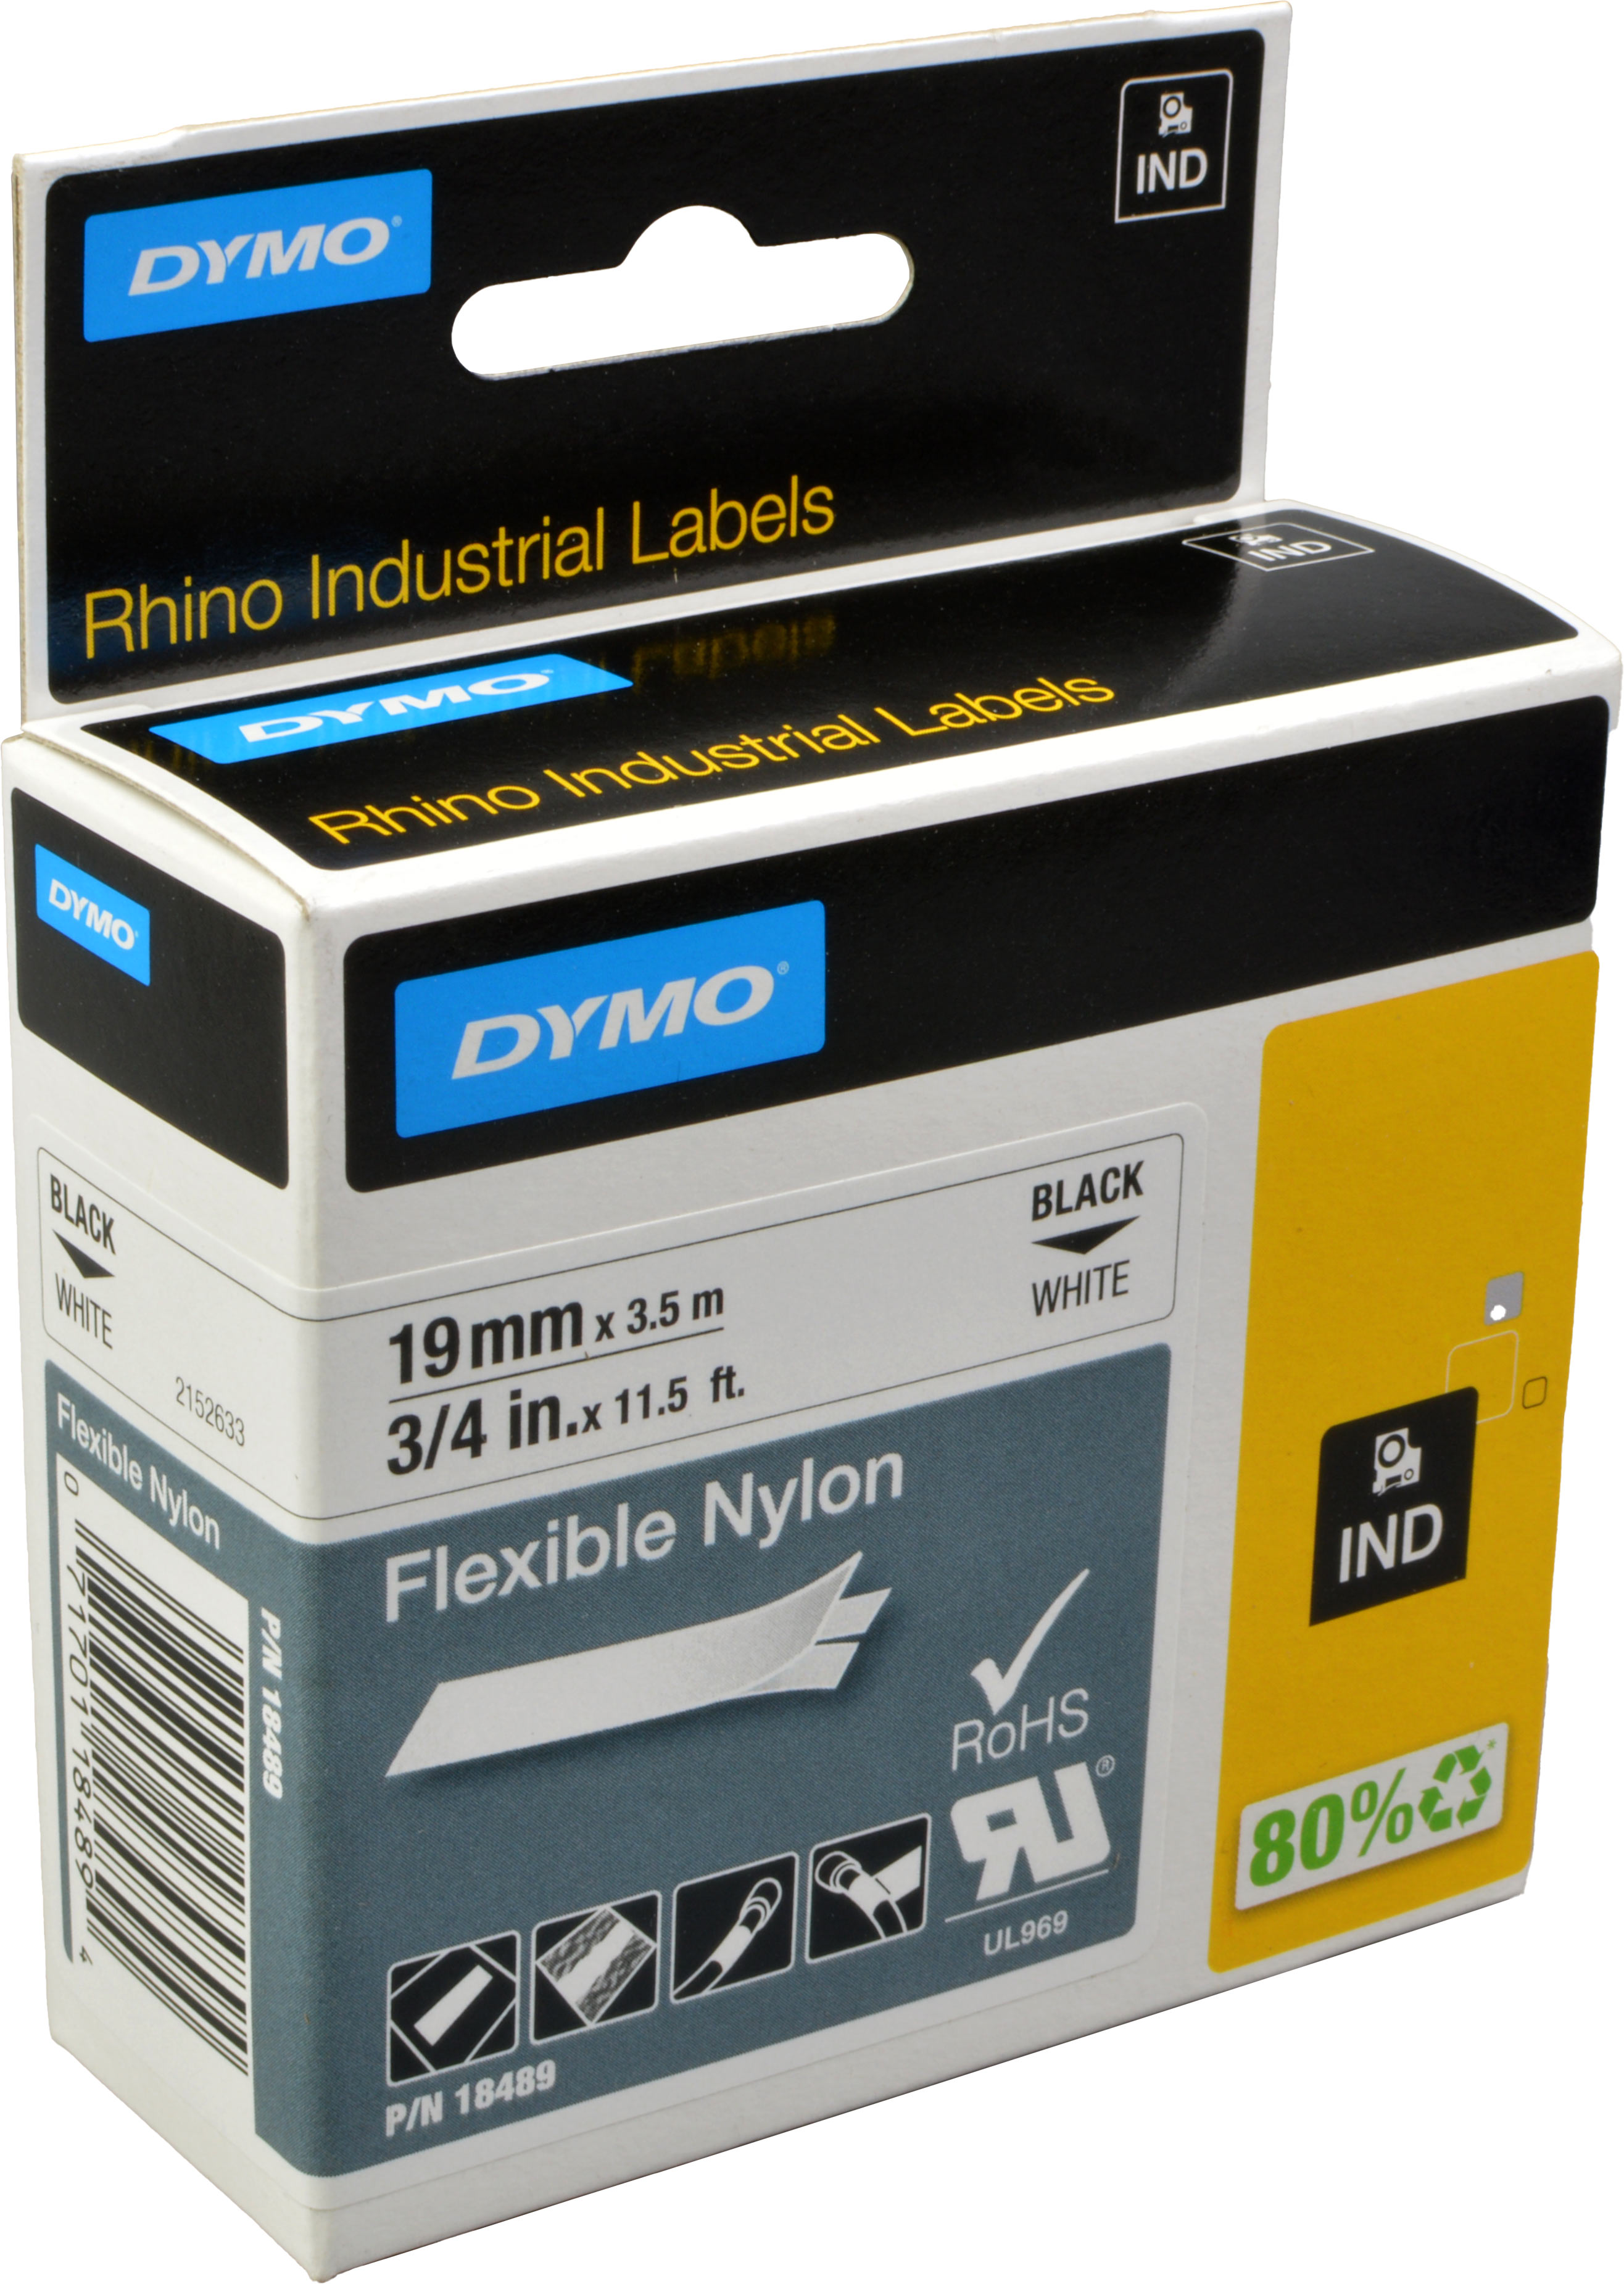 Dymo Originalband 18489  schwarz auf weiß  19mm x 3,5m  Nylon flexibel